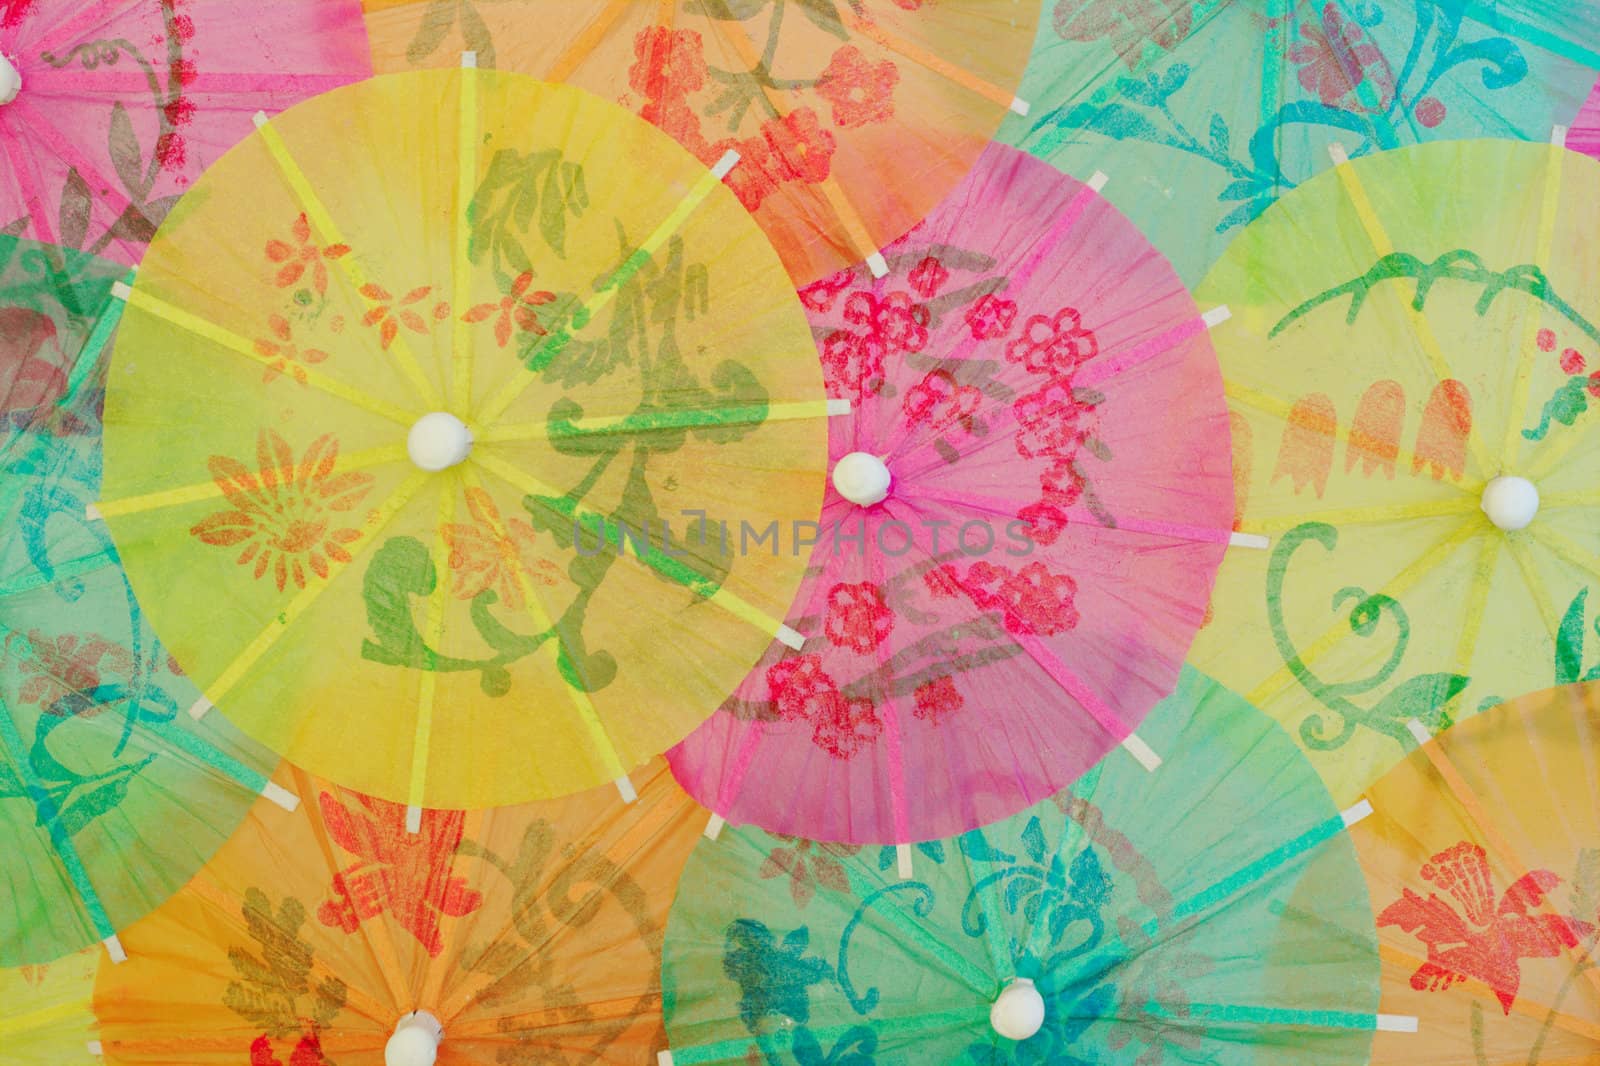 Colorful Sunshades by ildi